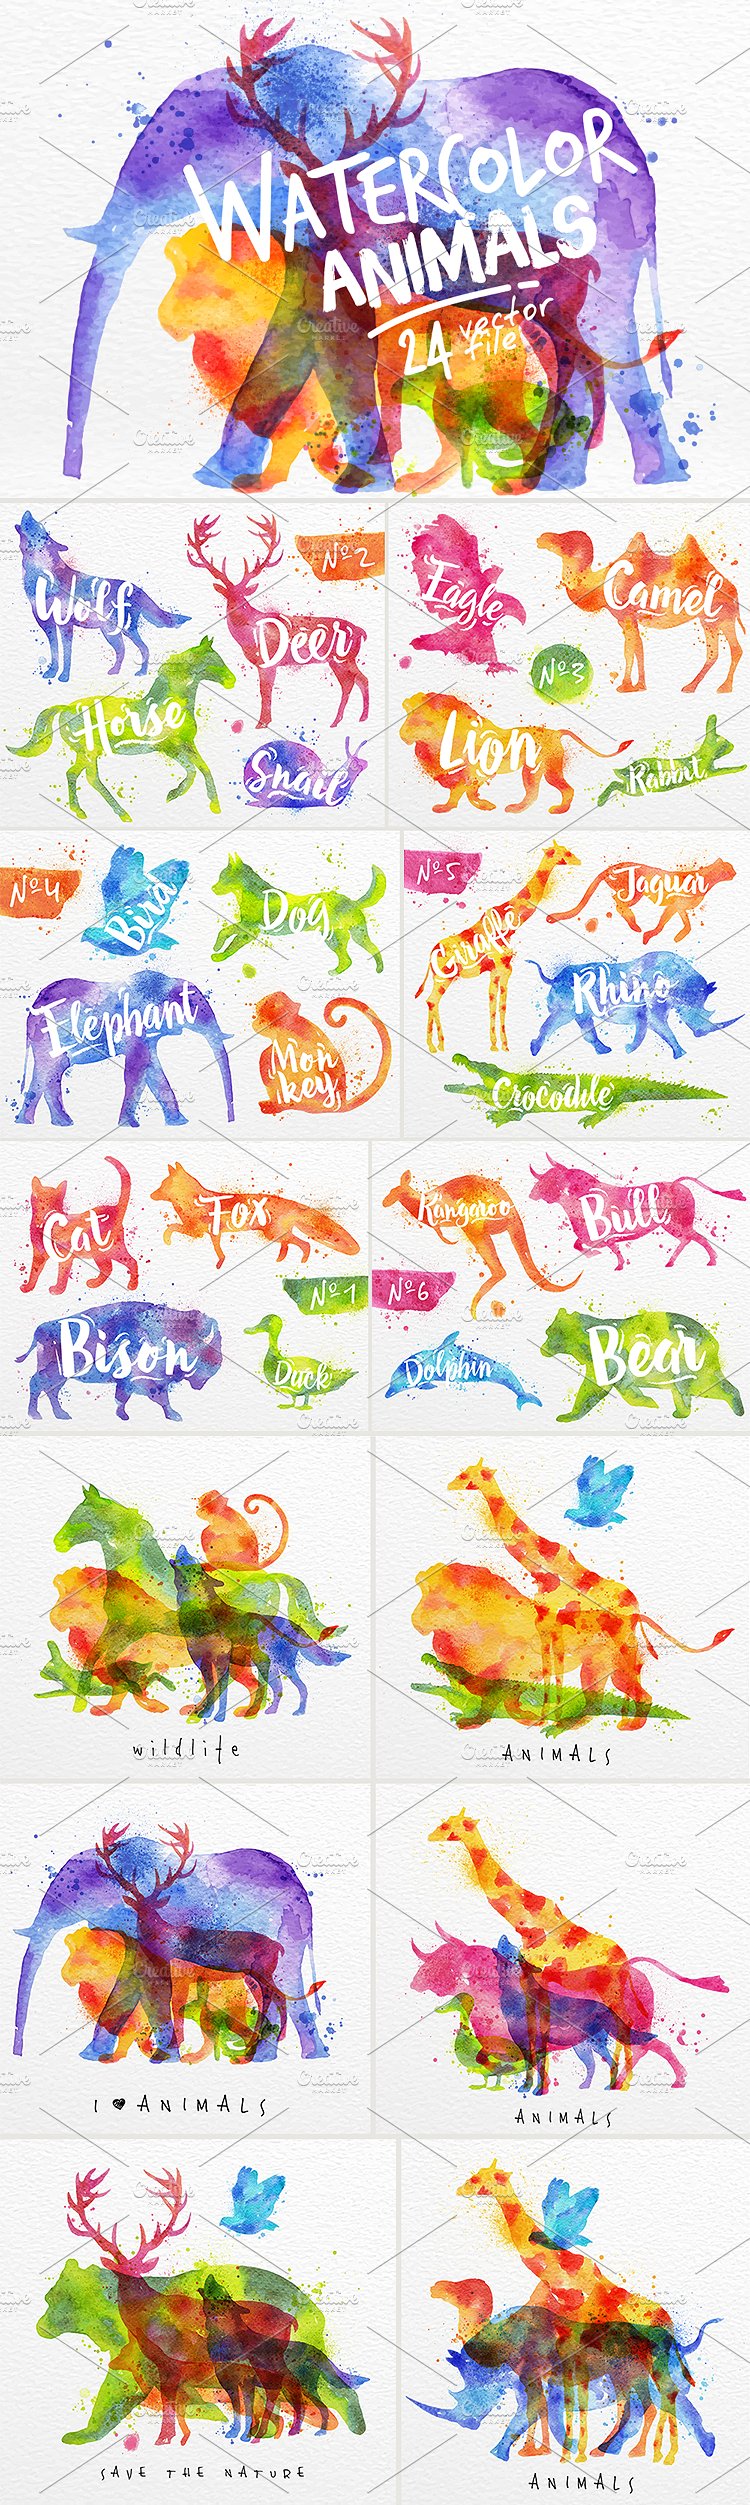 手绘水彩动物设计素材Watercolor Animals